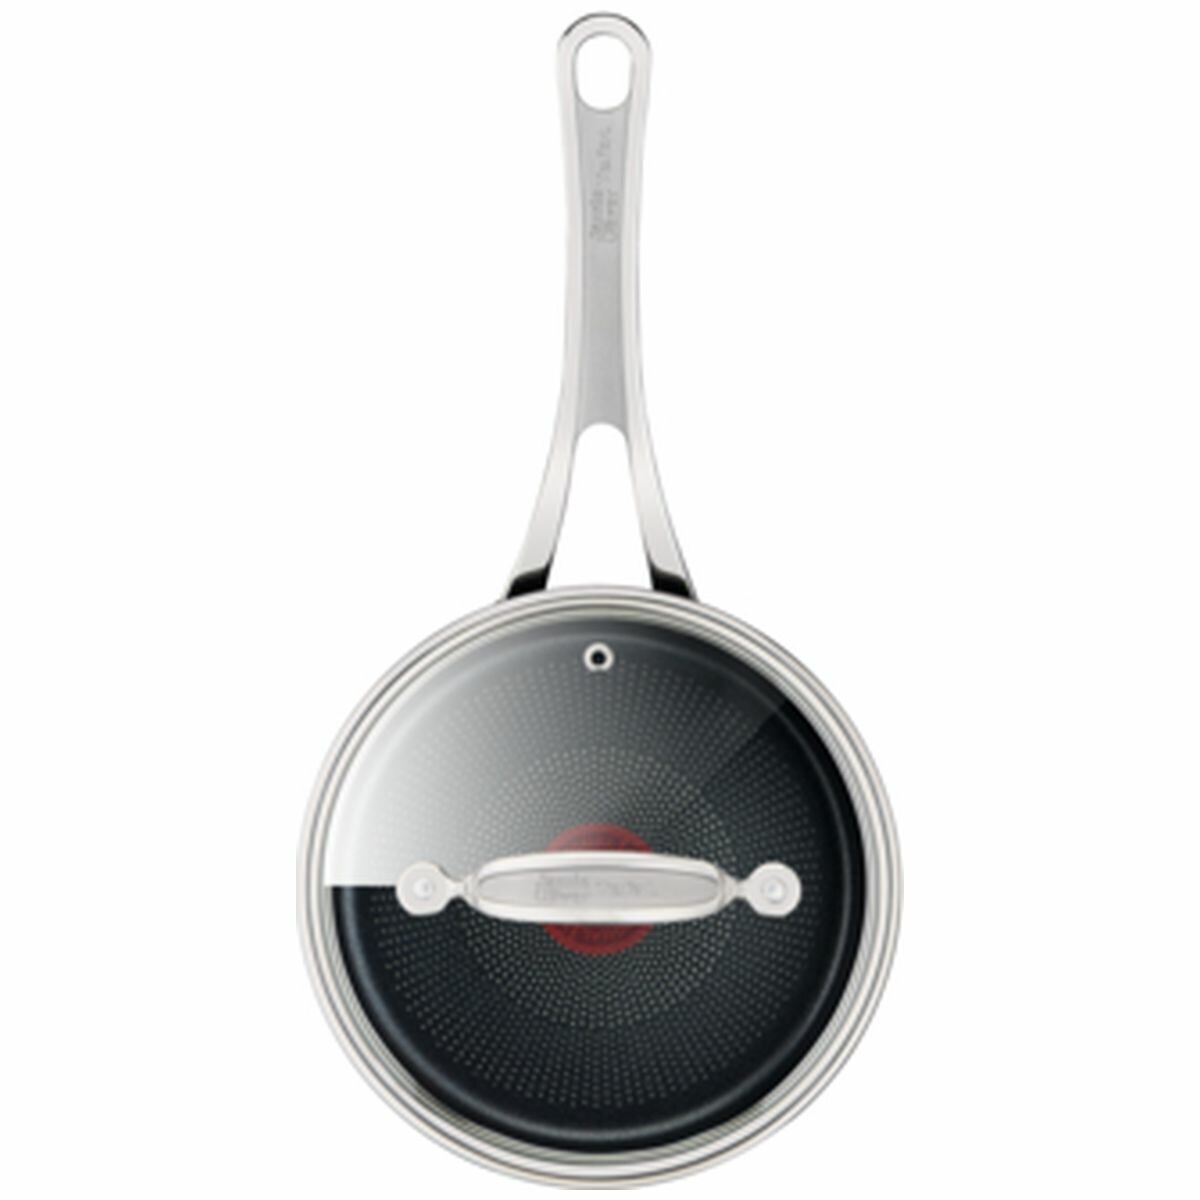 Jamie Oliver by Tefal 5-Piece 'Cooks Classic' Cookware Set & BONUS Grillpan